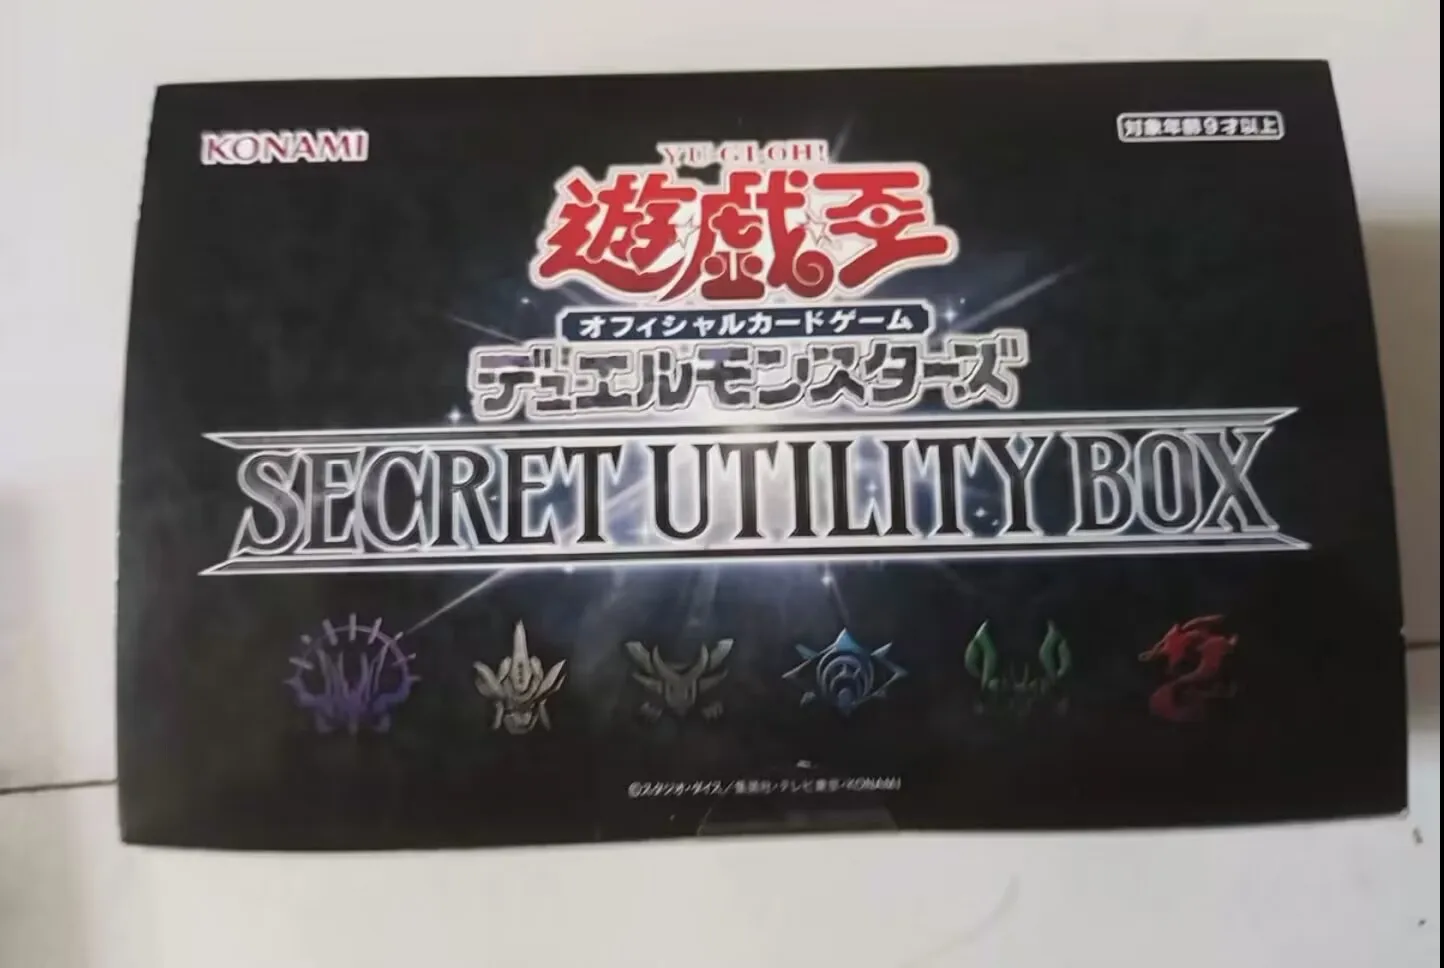 

Yu-Gi-Oh Card Game Yugioh OCG Duel Monsters Secret Utility Box Japanese Sealed